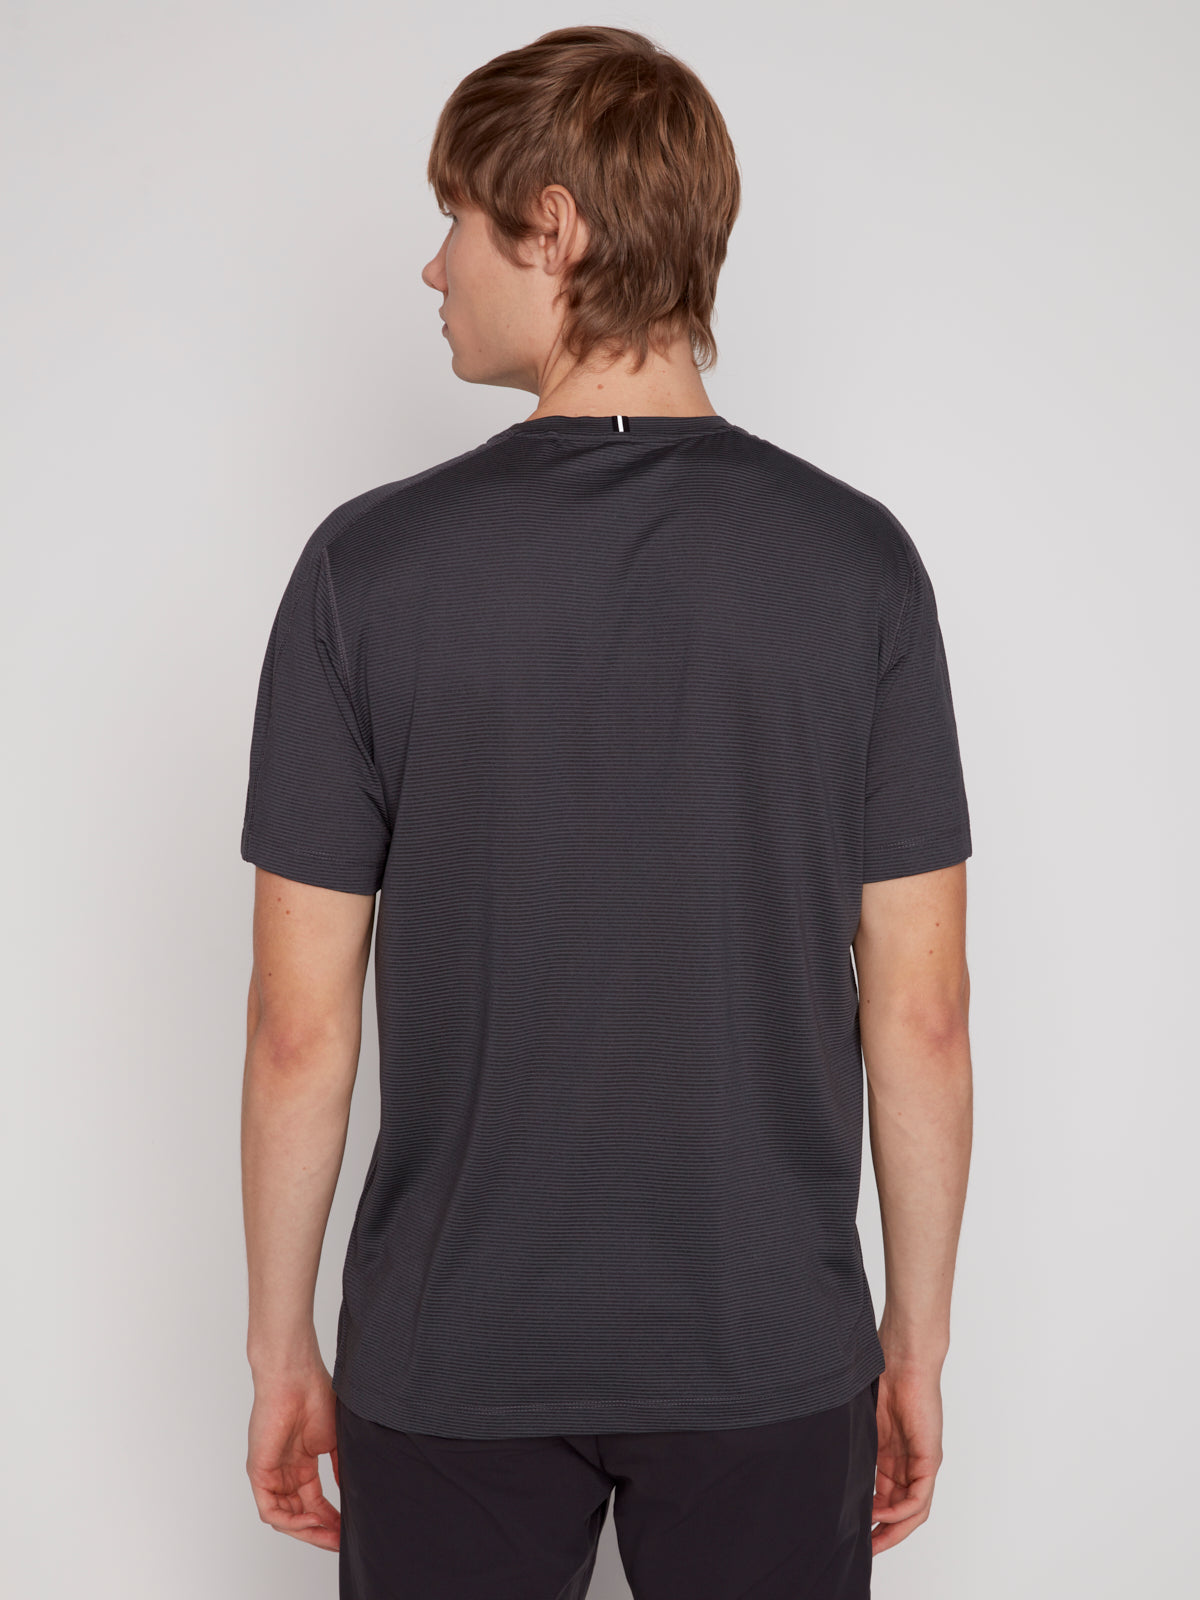 Solid stretch shirt, Projek Raw, Shop Men's Solid Shirts Online